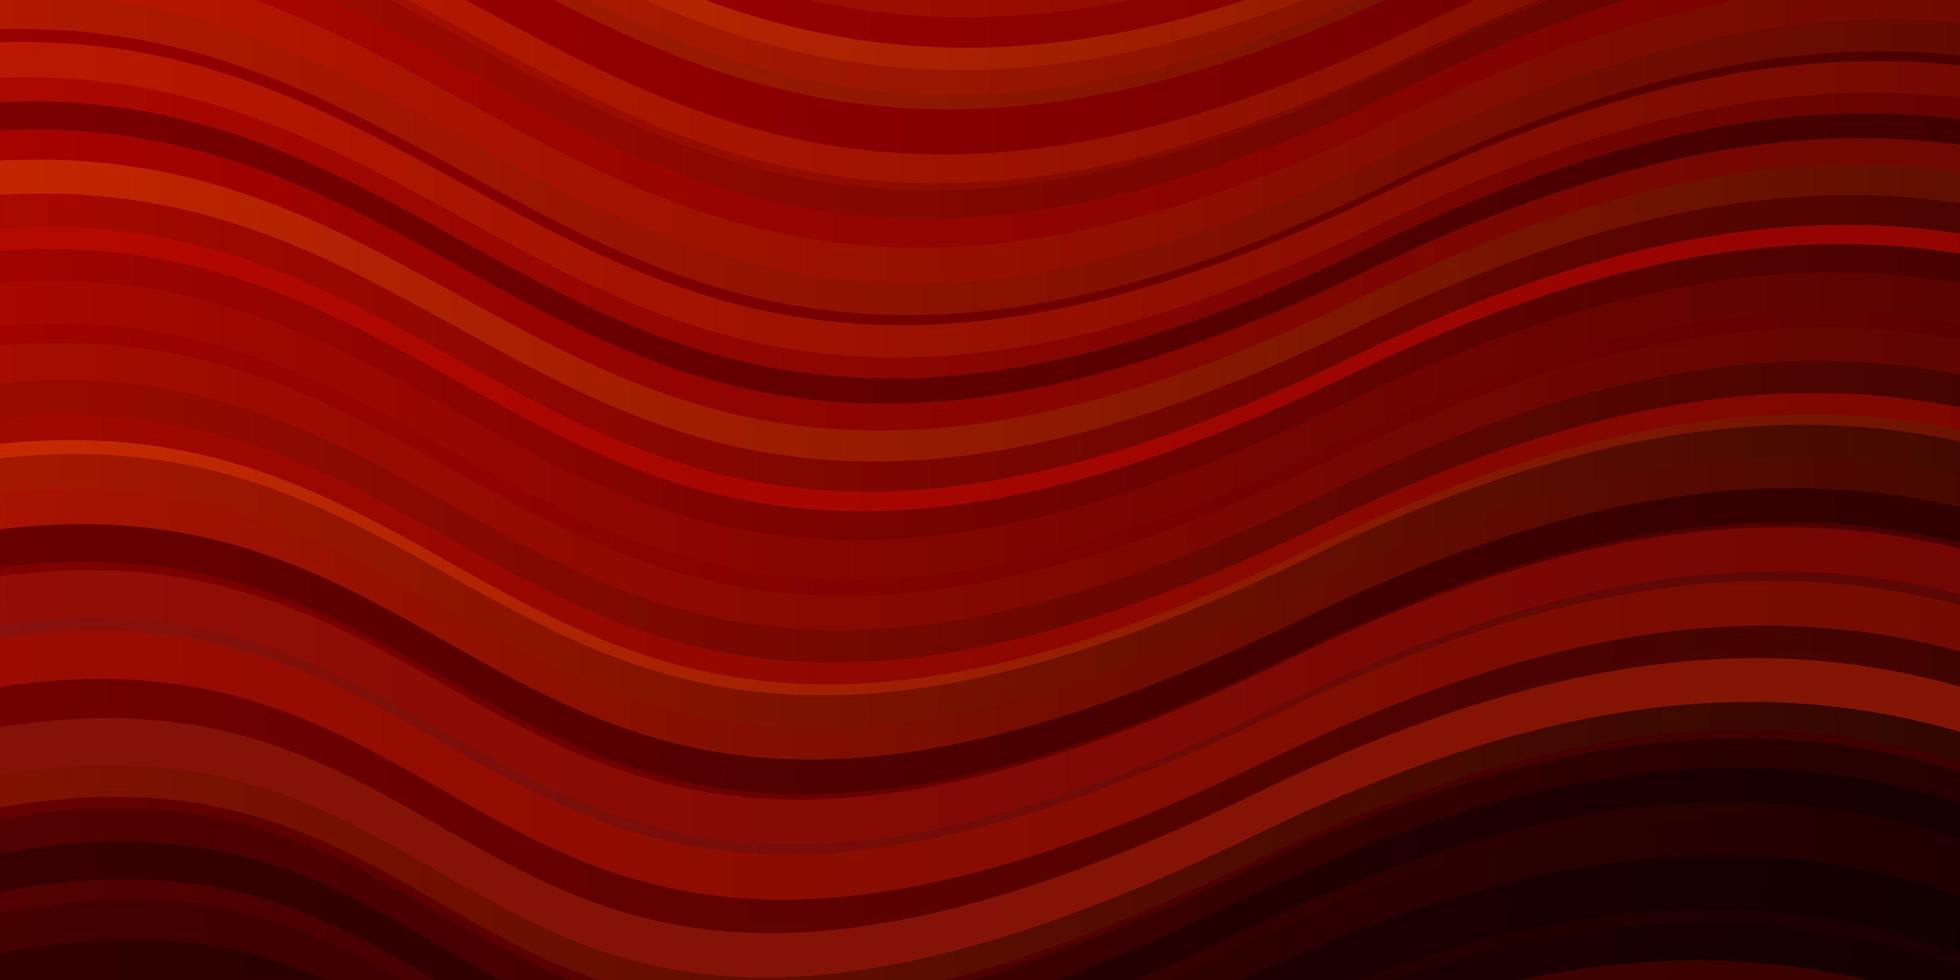 Fondo de vector rojo oscuro con arco circular nueva ilustración colorida con patrón de líneas dobladas para folletos de negocios folletos